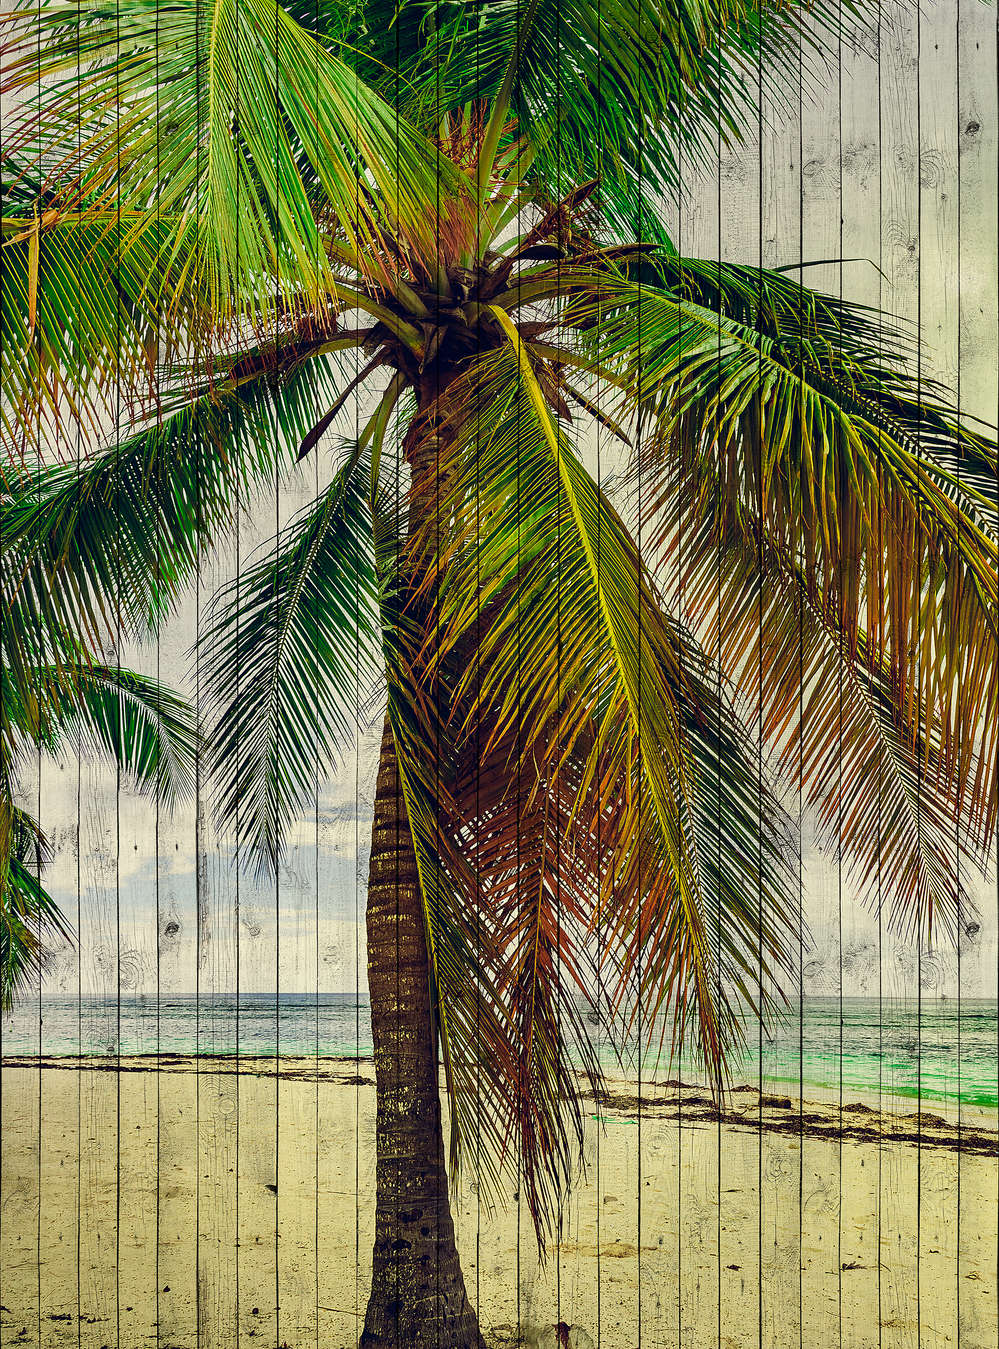             Tahiti 3 - Palmen Fototapete mit Urlaubsfeeling - Holzpaneele Struktur – Beige, Blau | Struktur Vlies
        